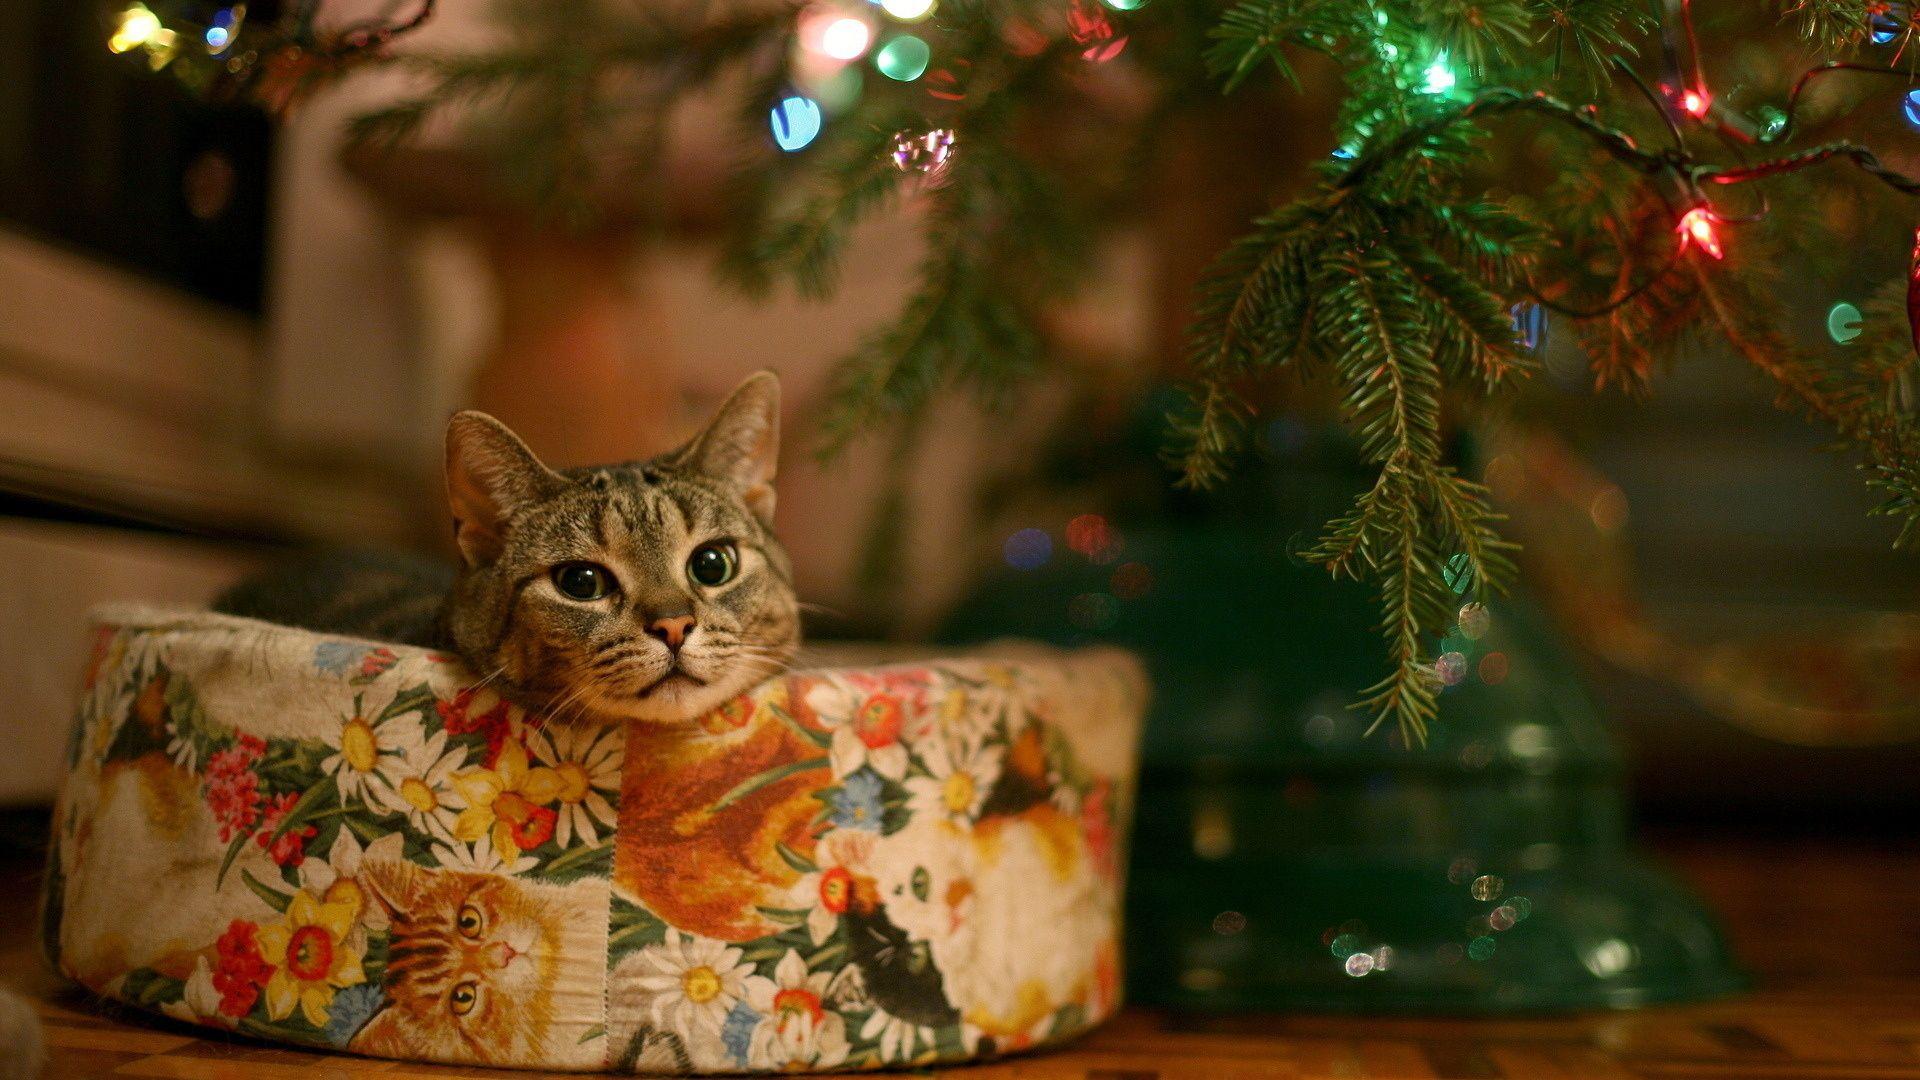 Christmas HD Wallpaper 1080p 1920x1080. Christmas cats, Cats, Christmas animals